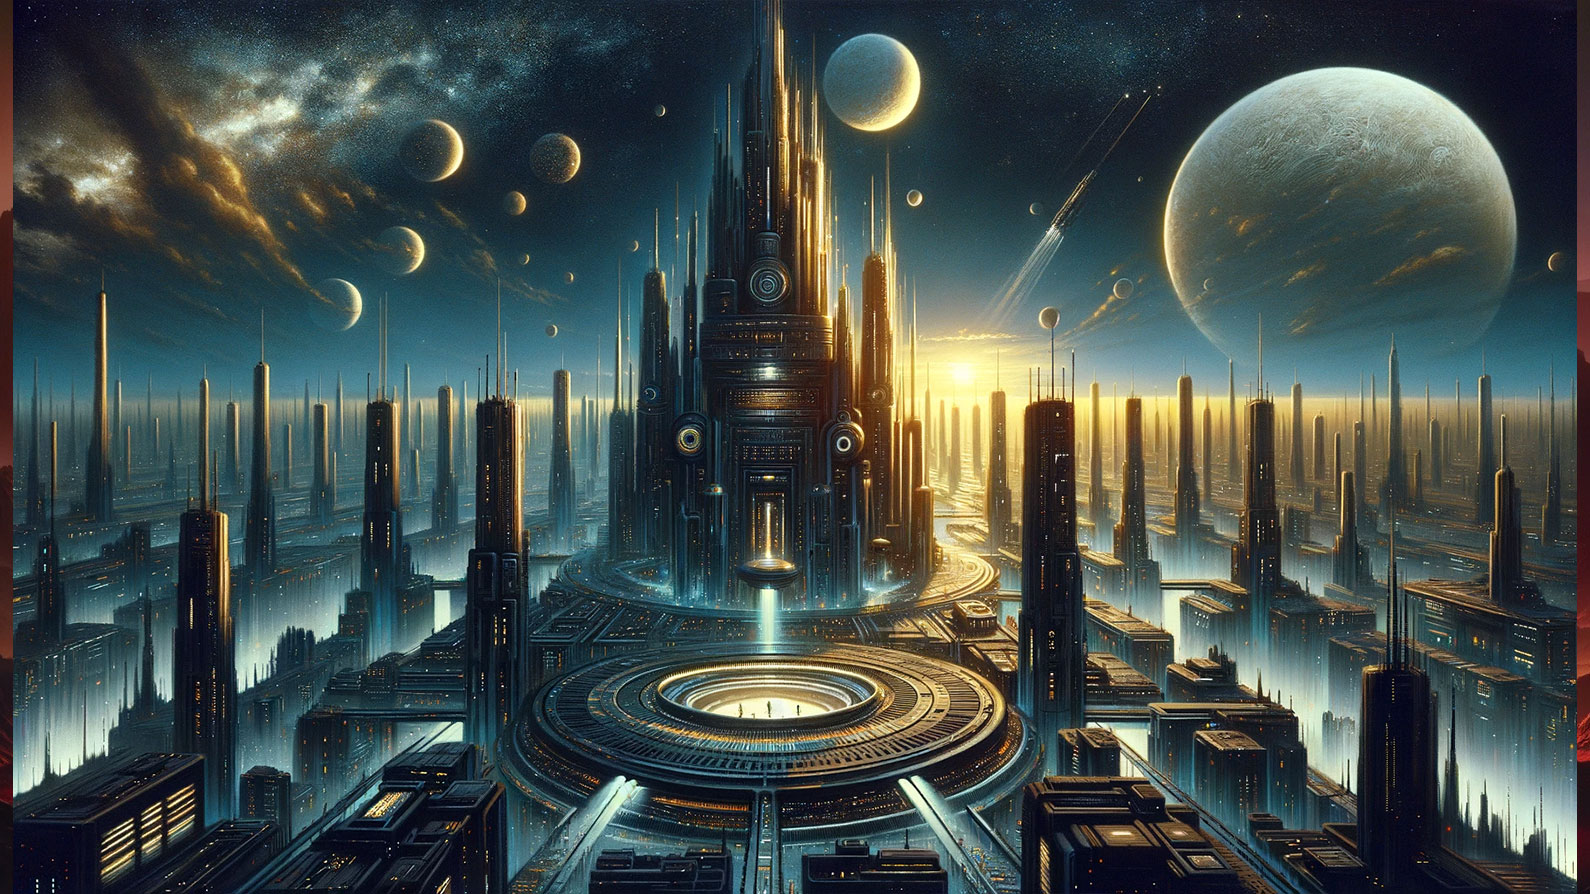 Foundation van Isaac Asimov boek recensie review planeten kasteel ruimte science fiction